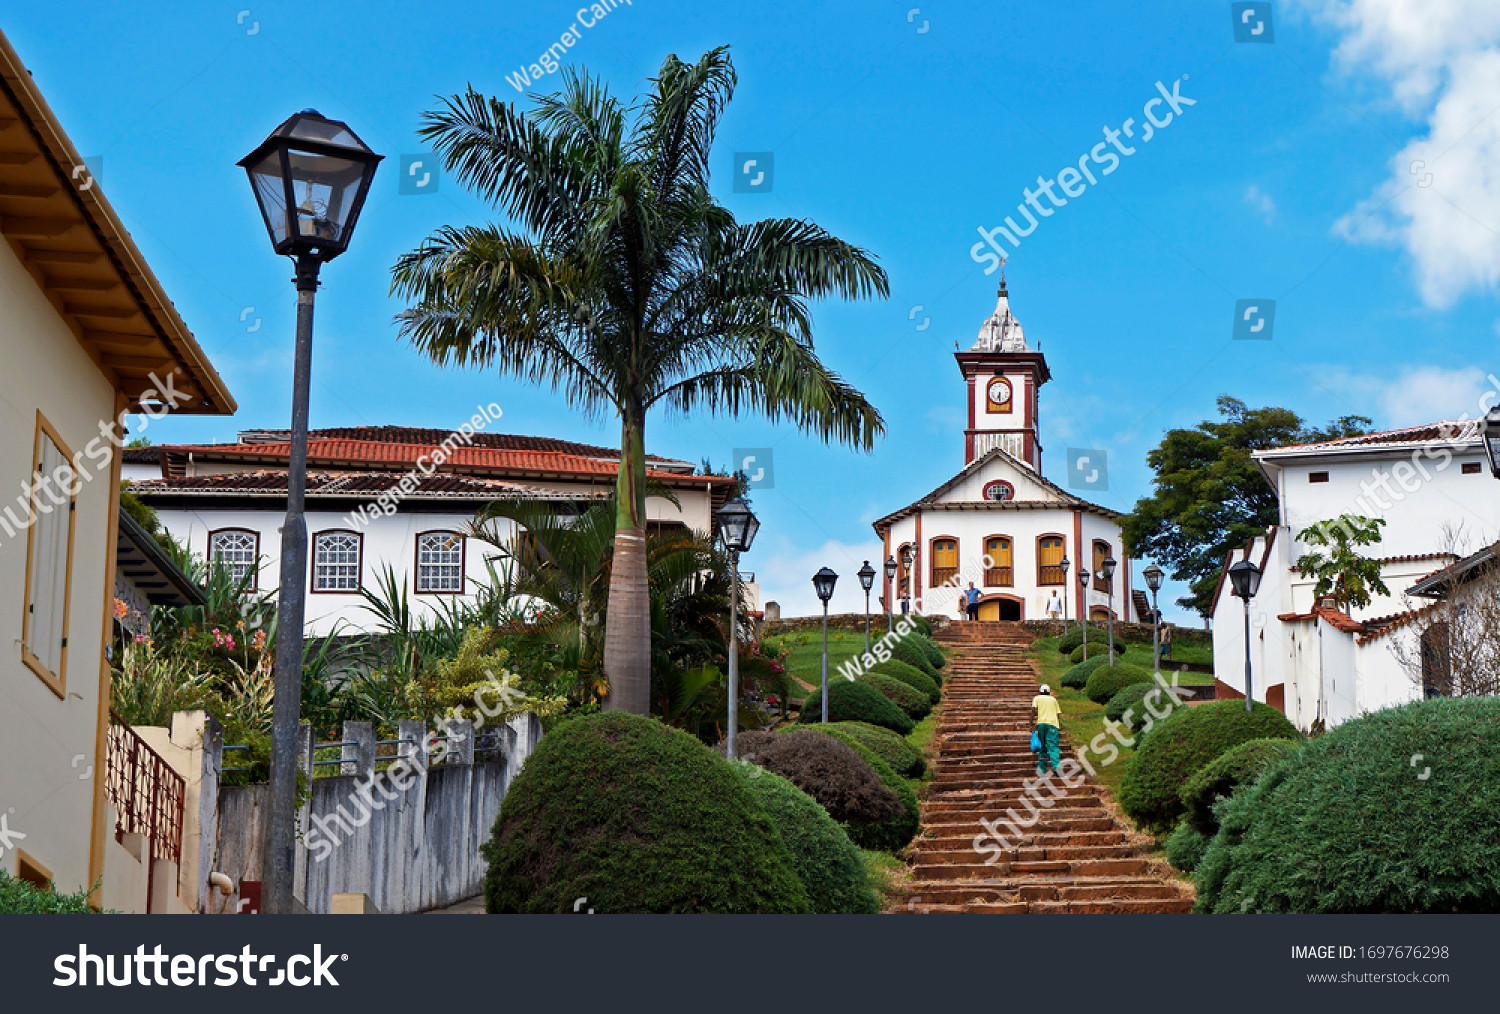 SERRO, MINAS GERAIS, BRAZIL - JANUARY 21, 2019: Baroque church at historical center.                             #1697676298